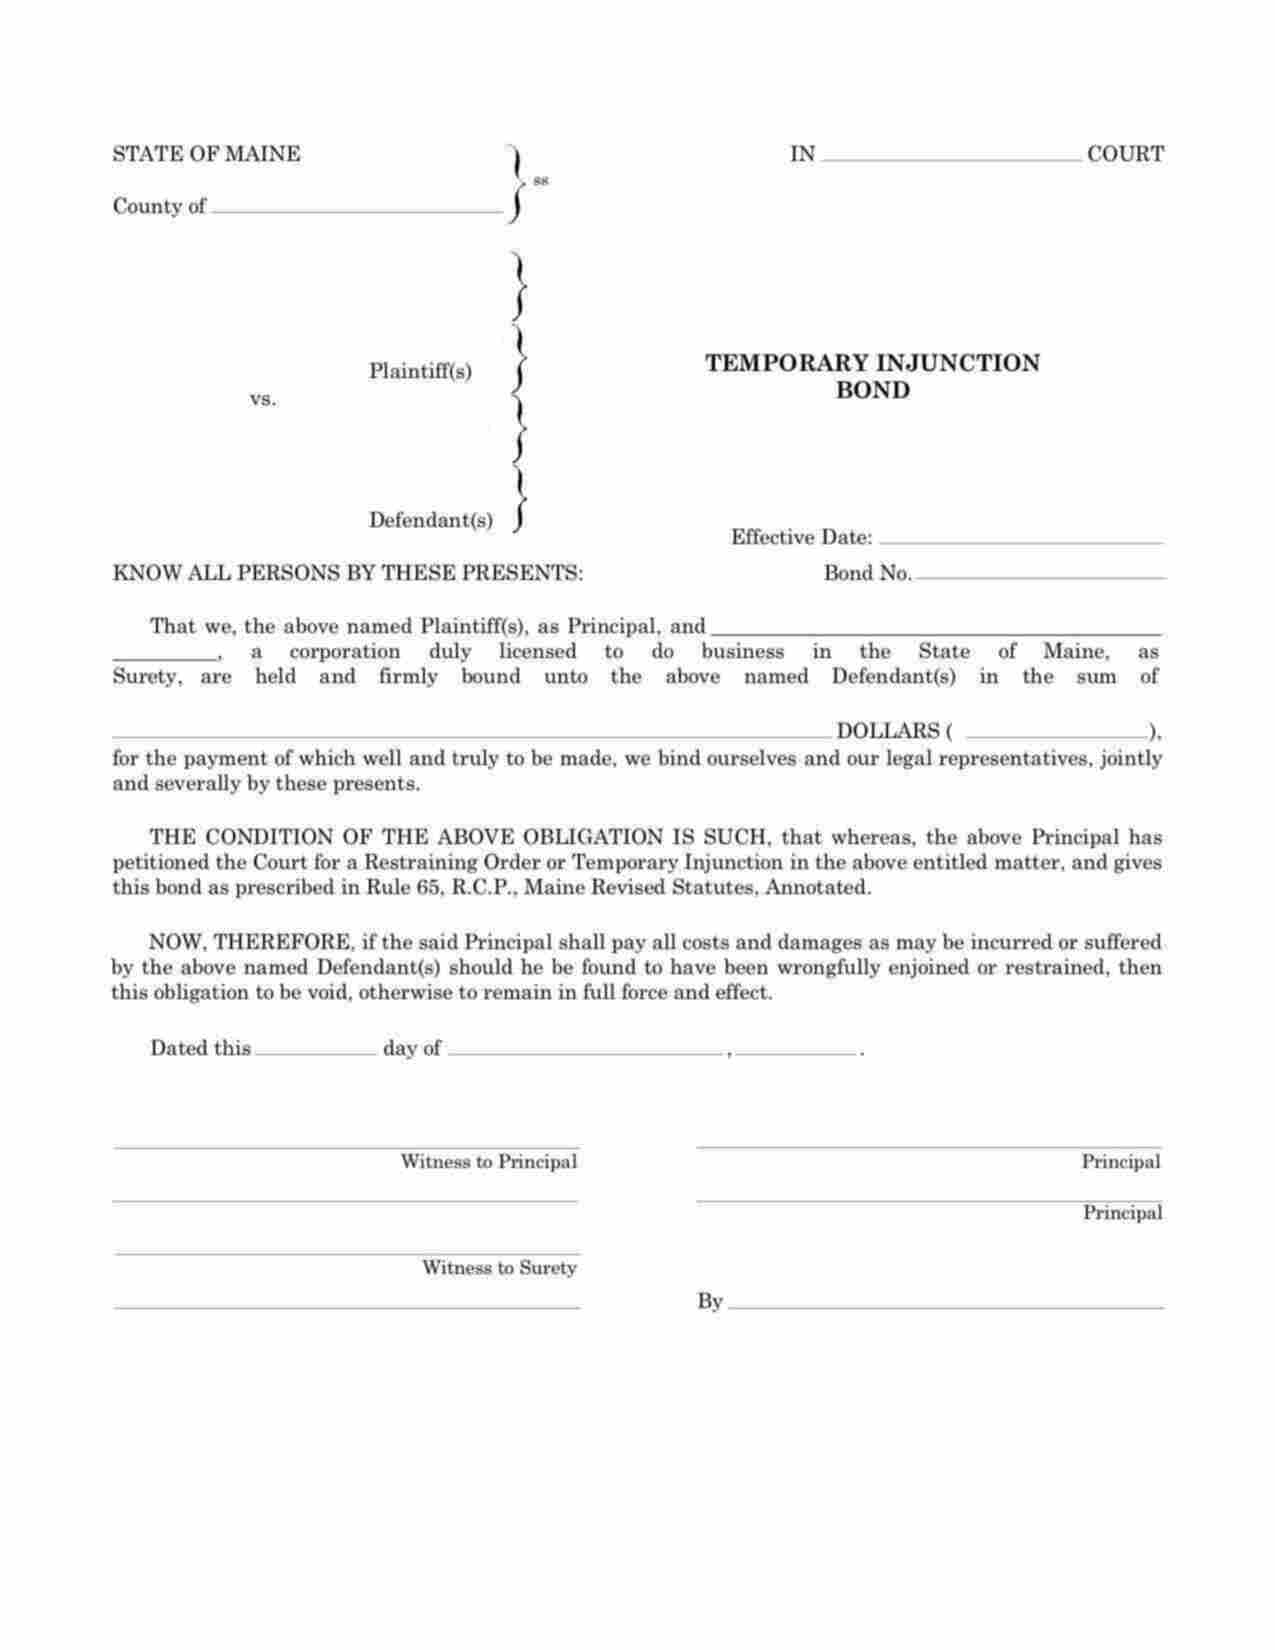 Maine Temporary Injunction Bond Form